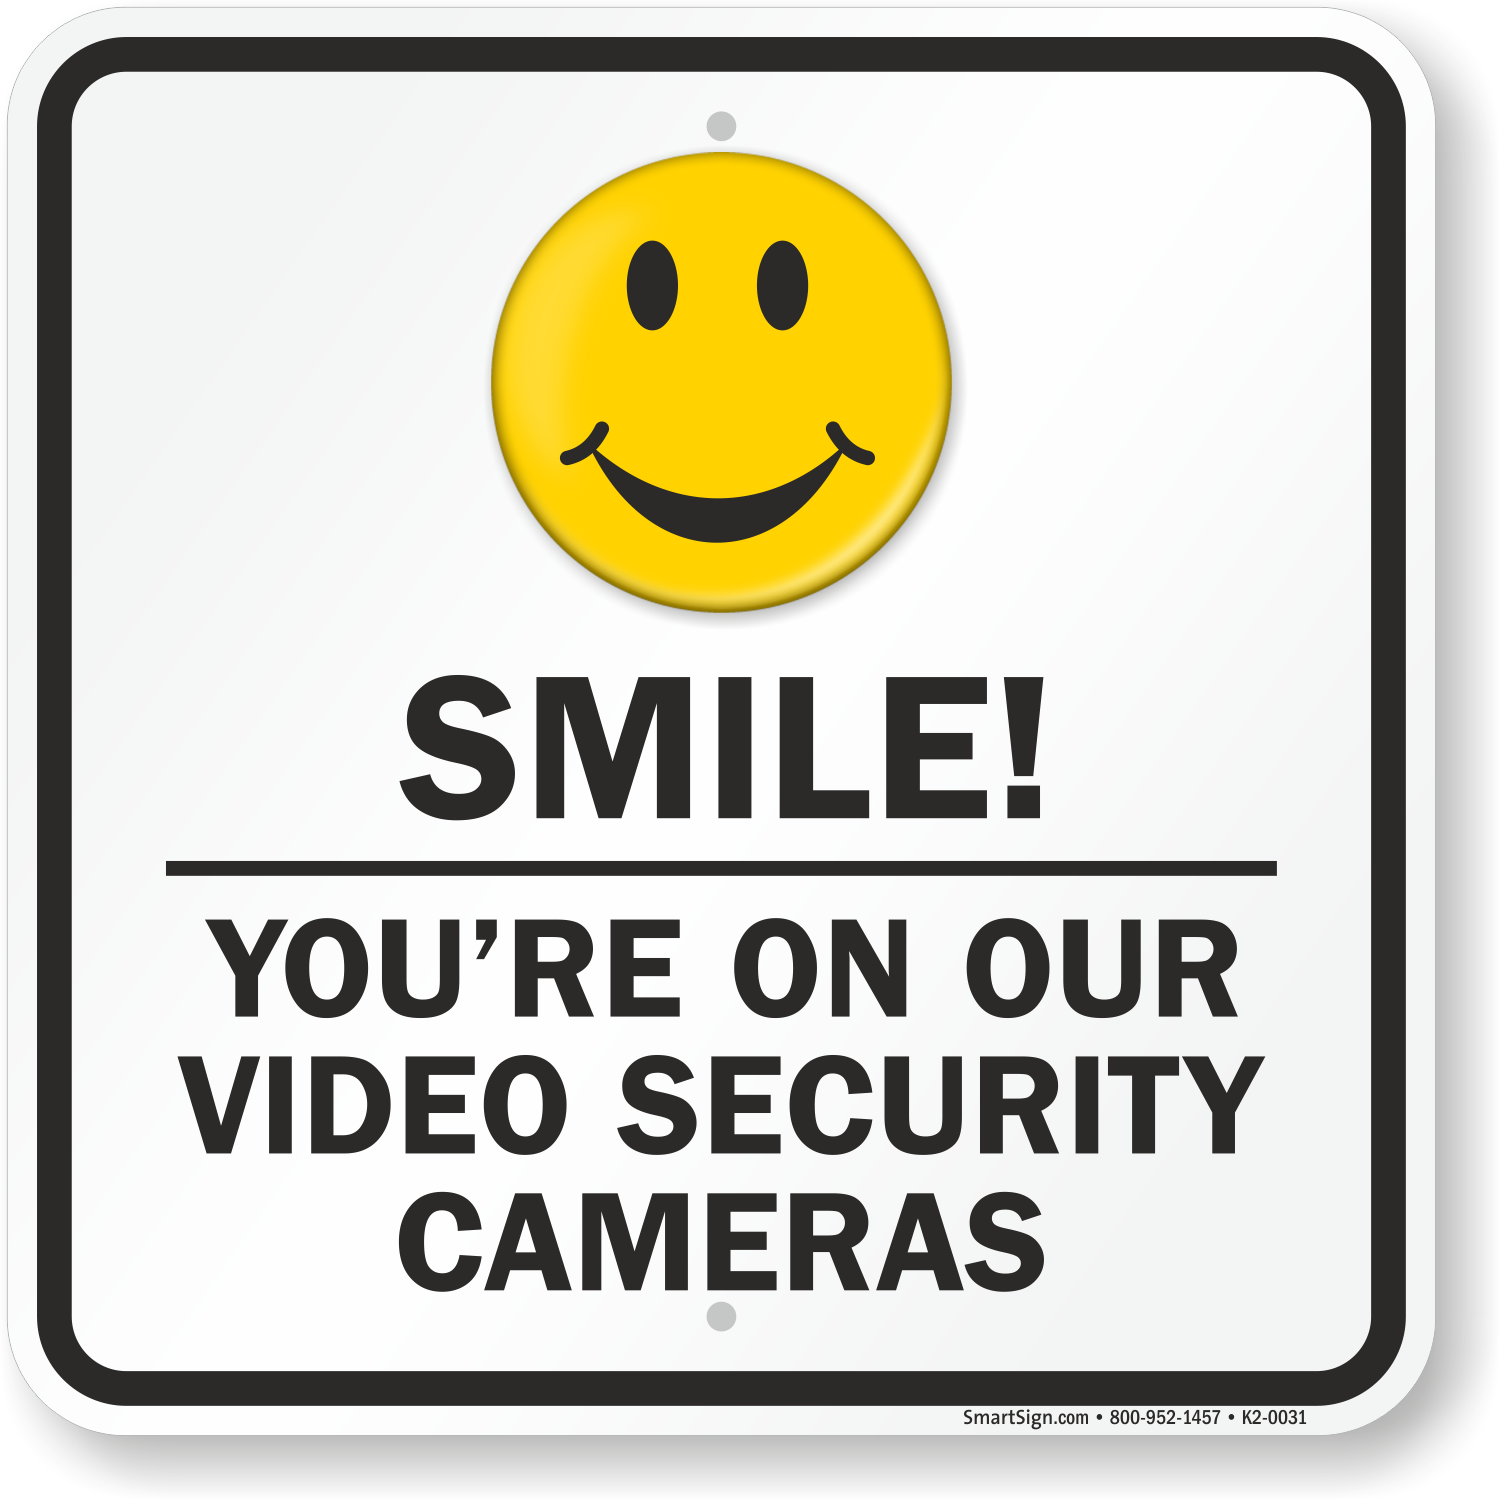 Smile You're On Video Security Cameras Sign, SKU K20031